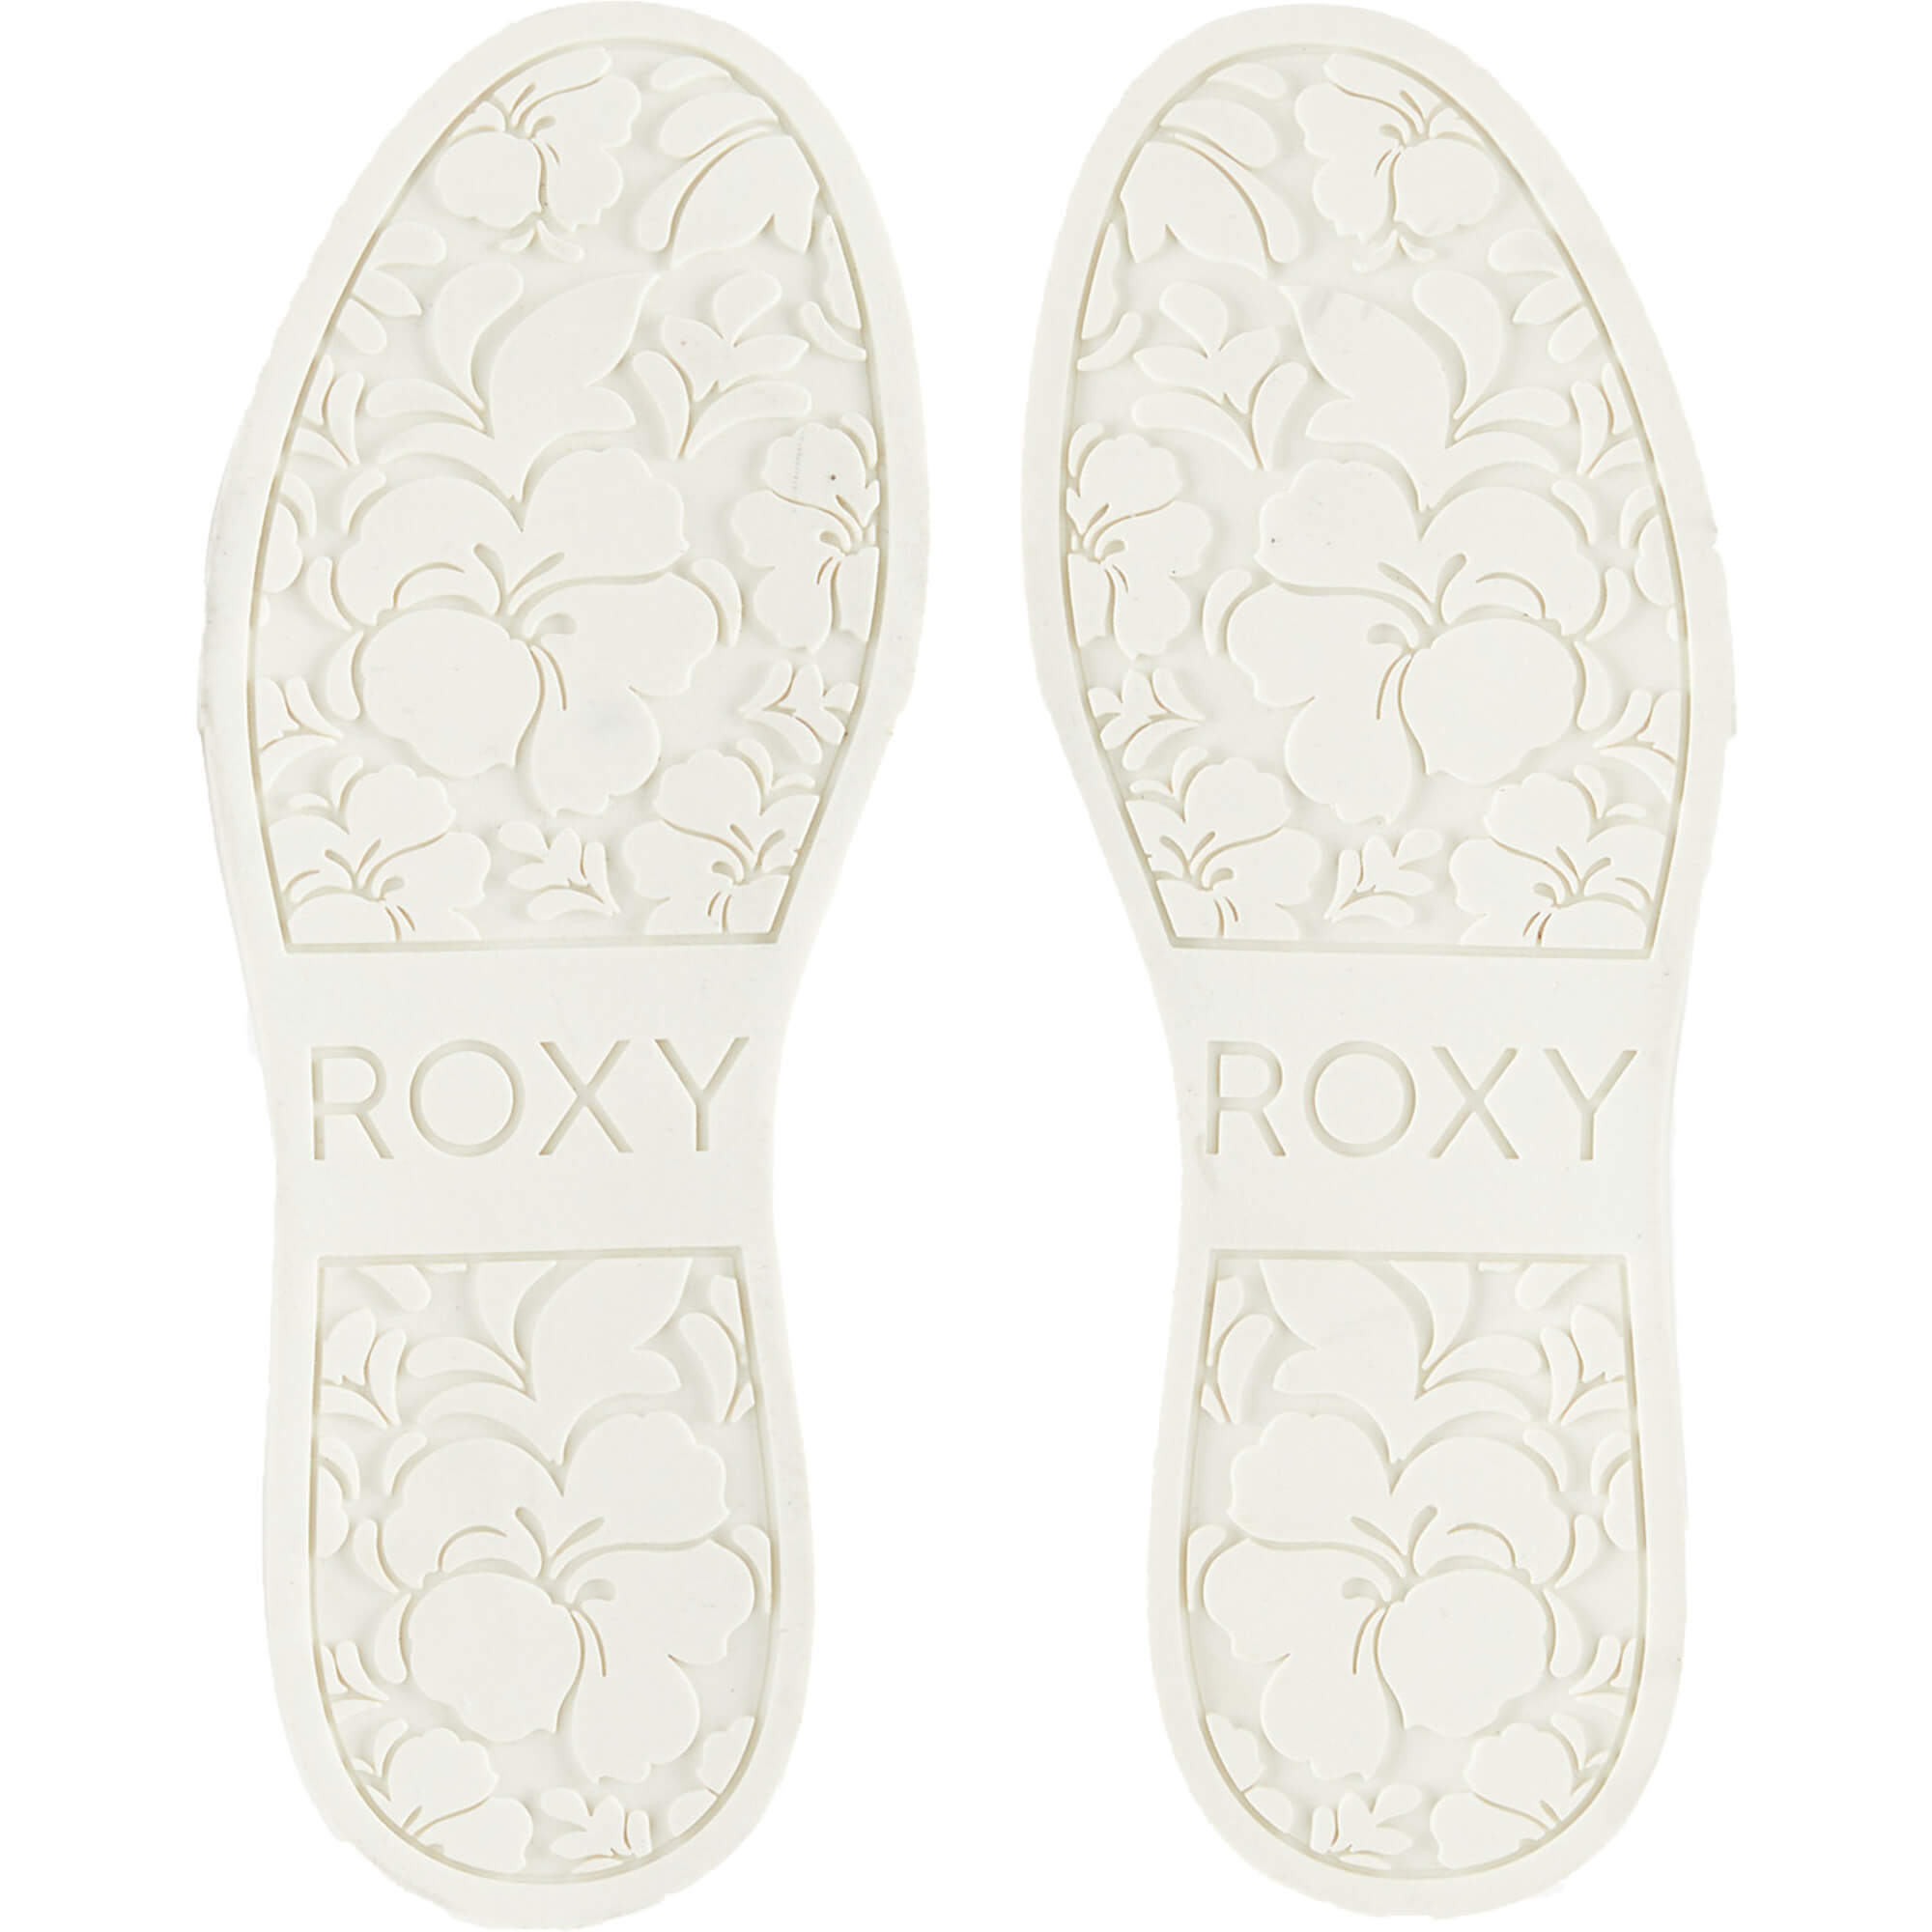 Roxy Theeo Women's Snow/Winter Boots